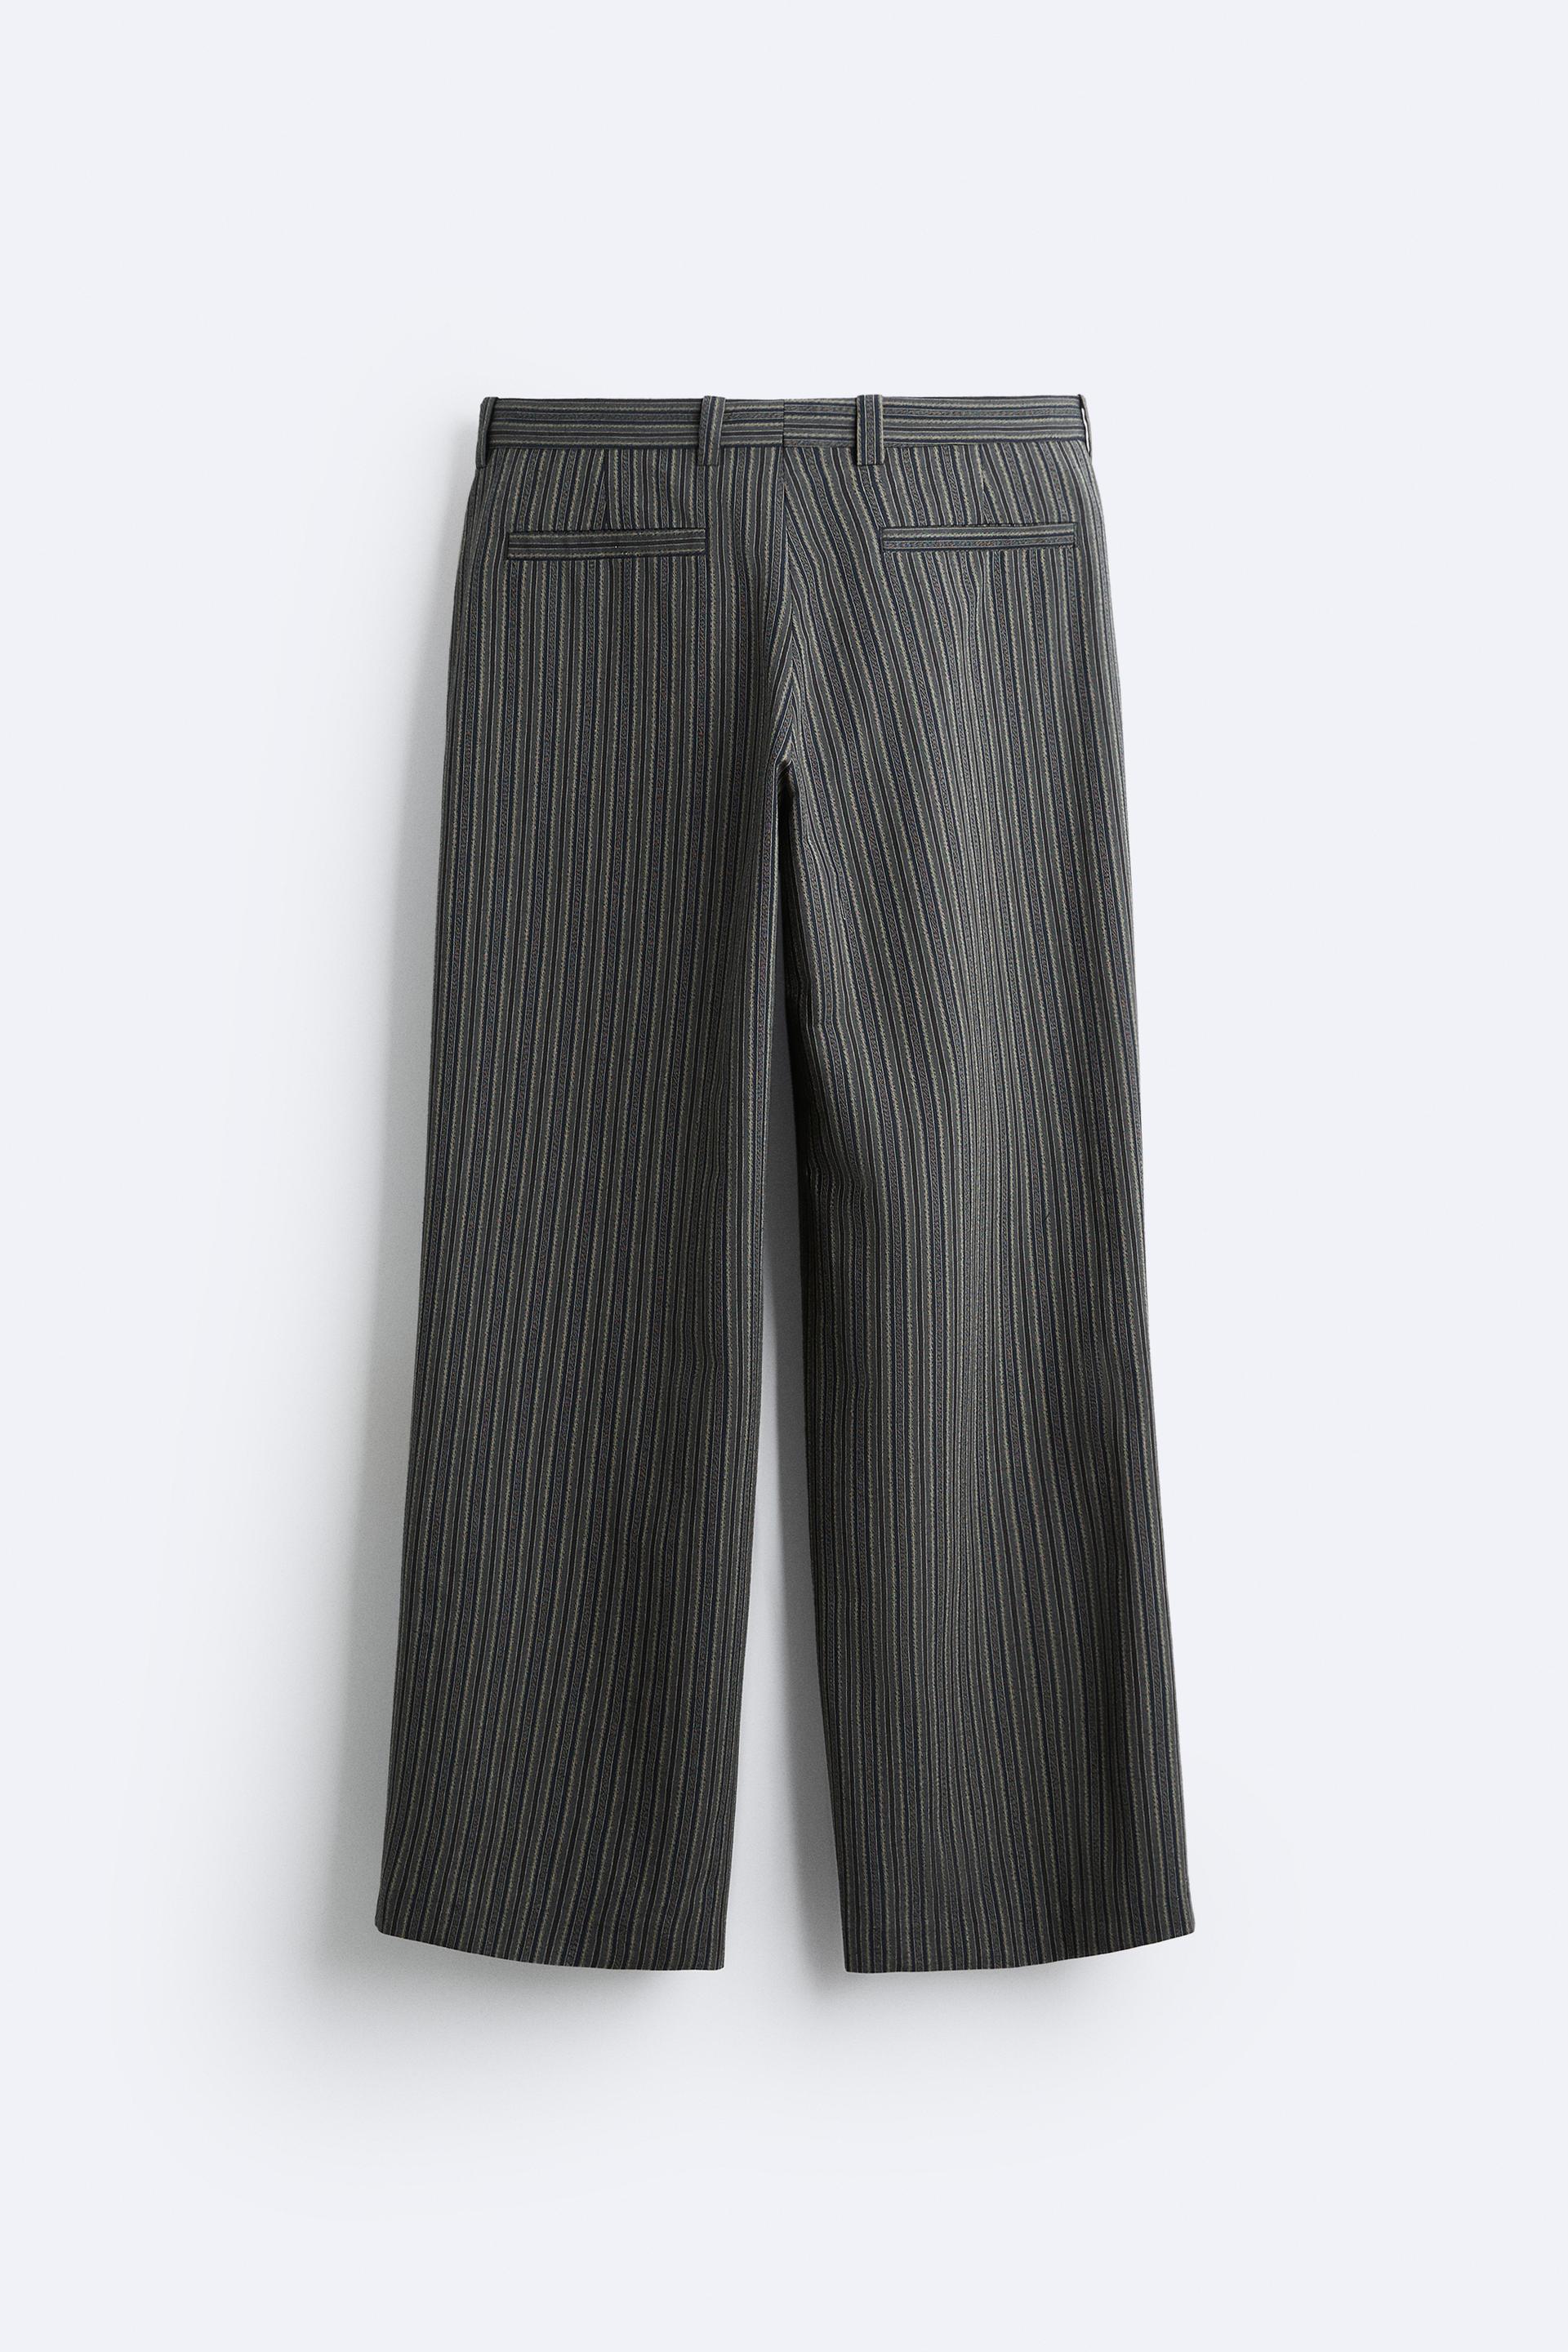 Zara DIY Pants: the Double Red Stripe - Kremb de la Kremb